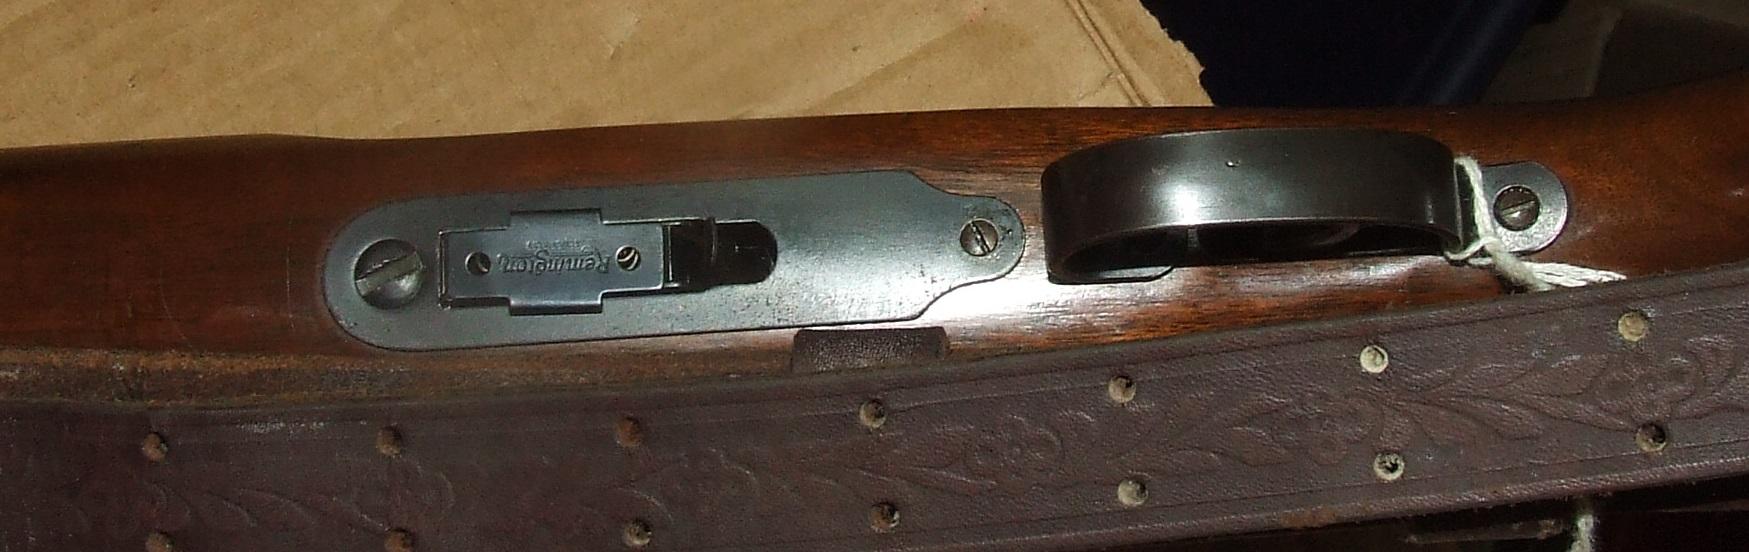 Remington 521T 22 LR Rifle